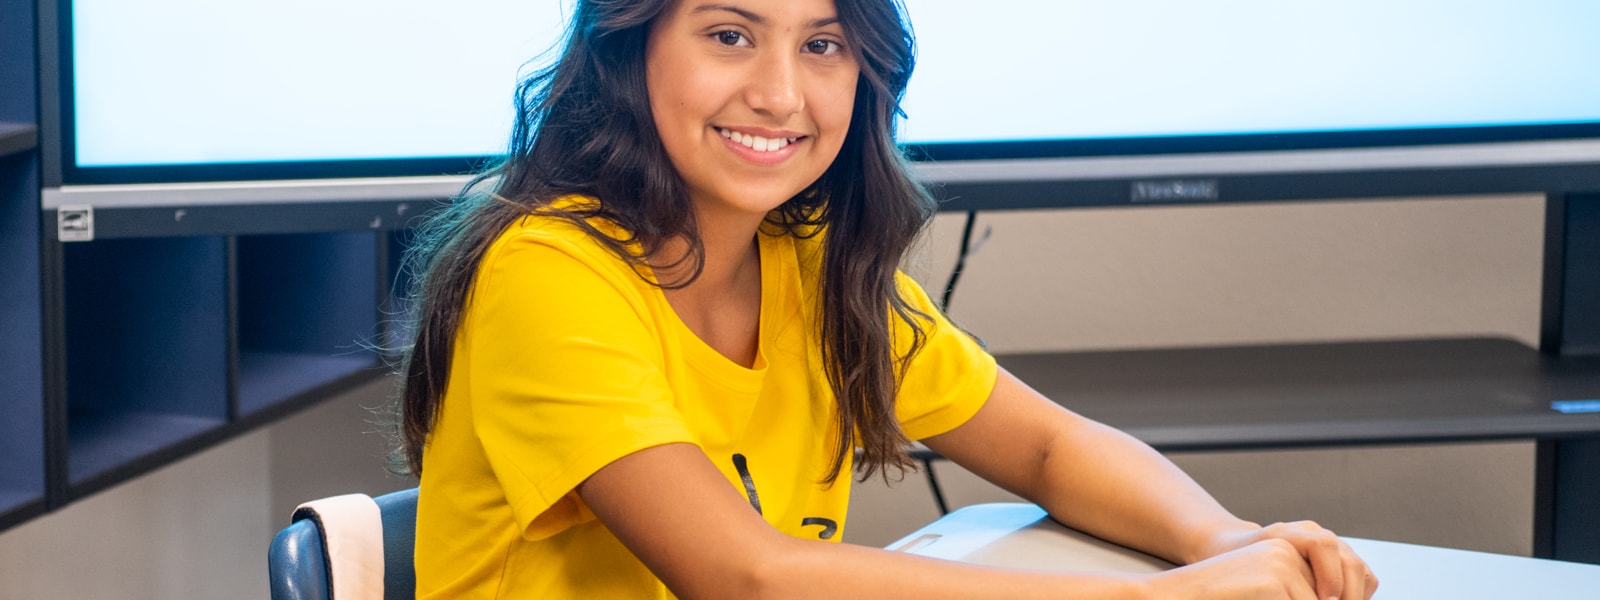 student at desk smiling